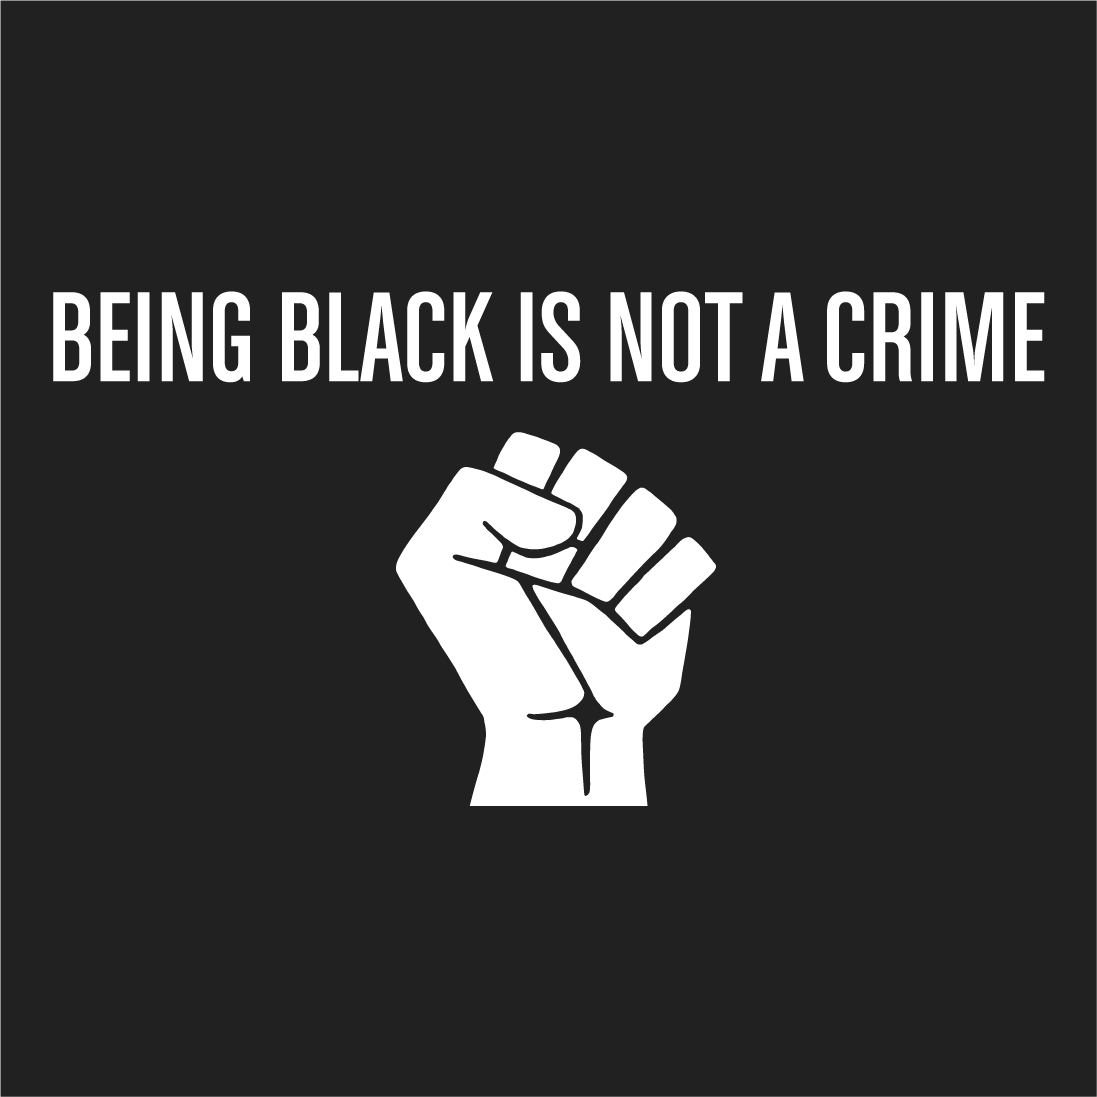 BLACK LIVES MATTER - Bail Fund Fundraiser shirt design - zoomed